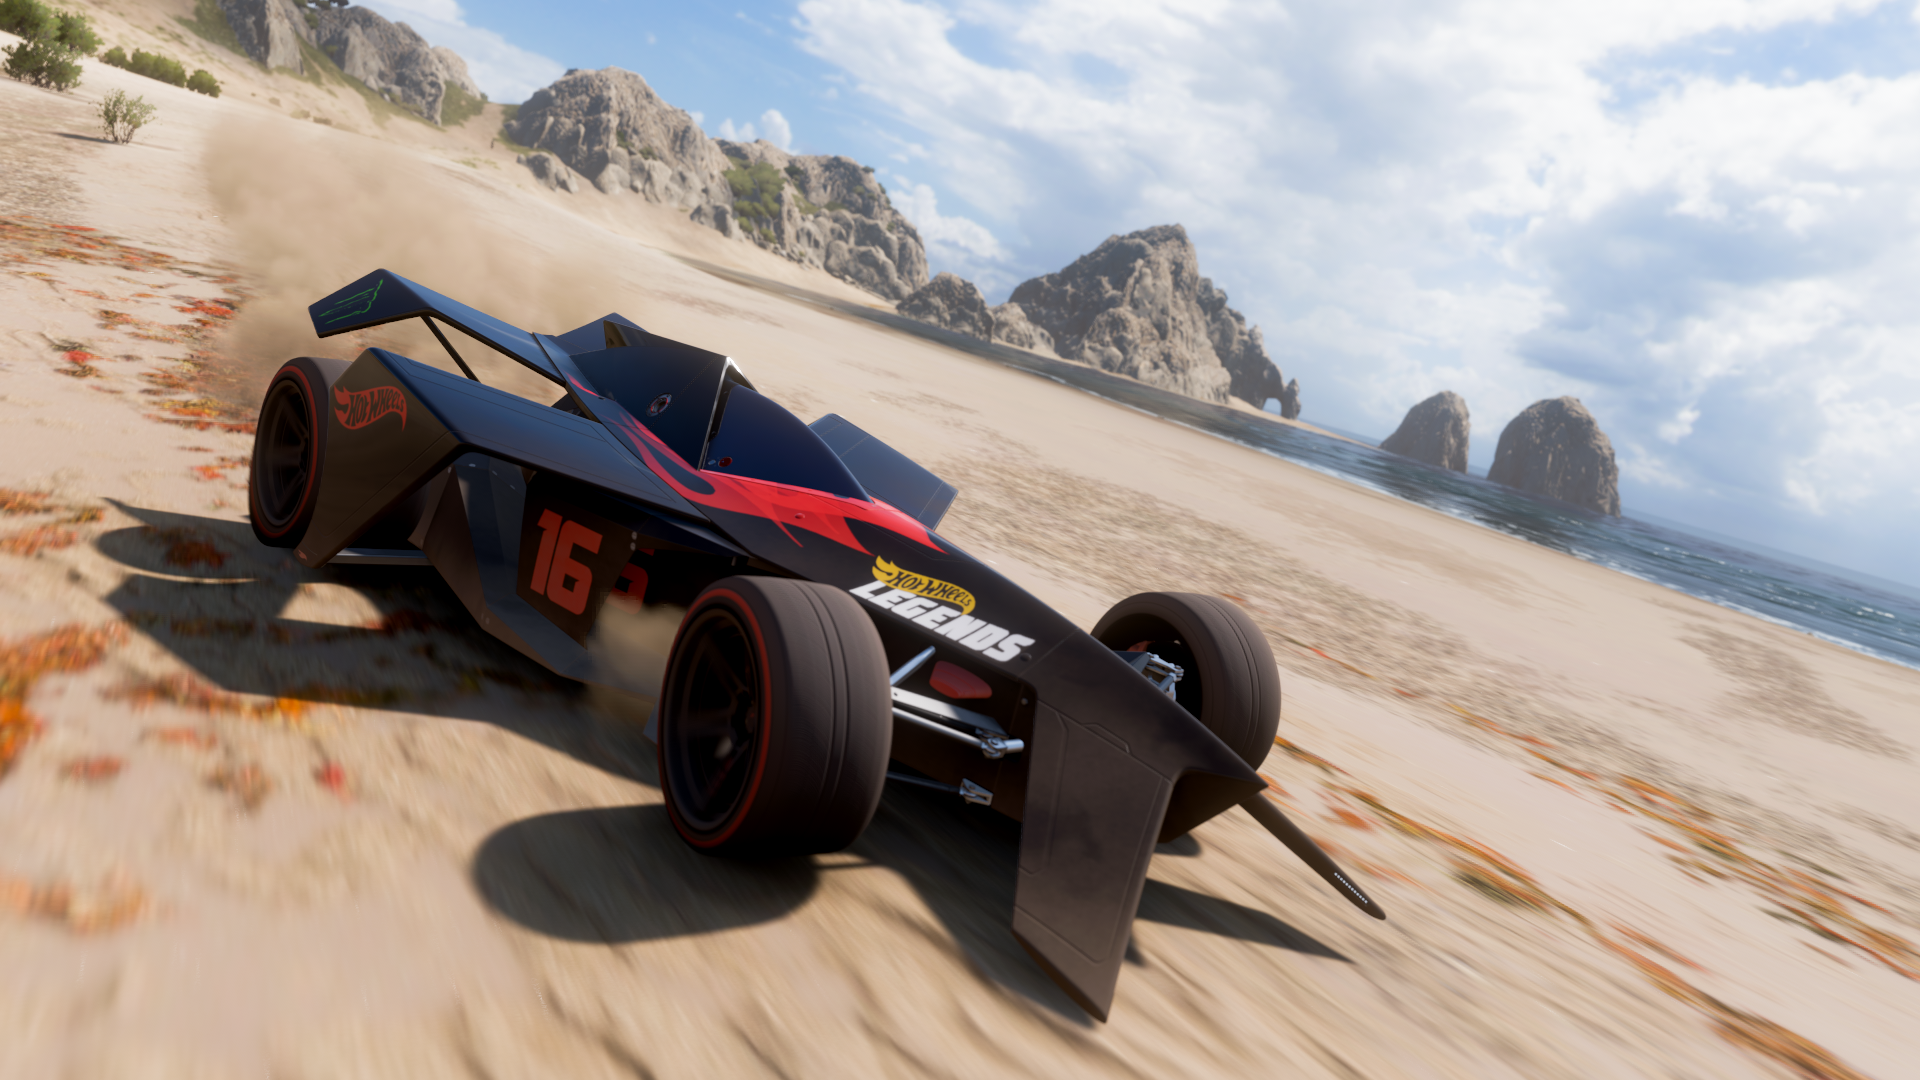 General 1920x1080 Forza Horizon 5 video games Hot Wheels car CGI mountains clouds water race cars